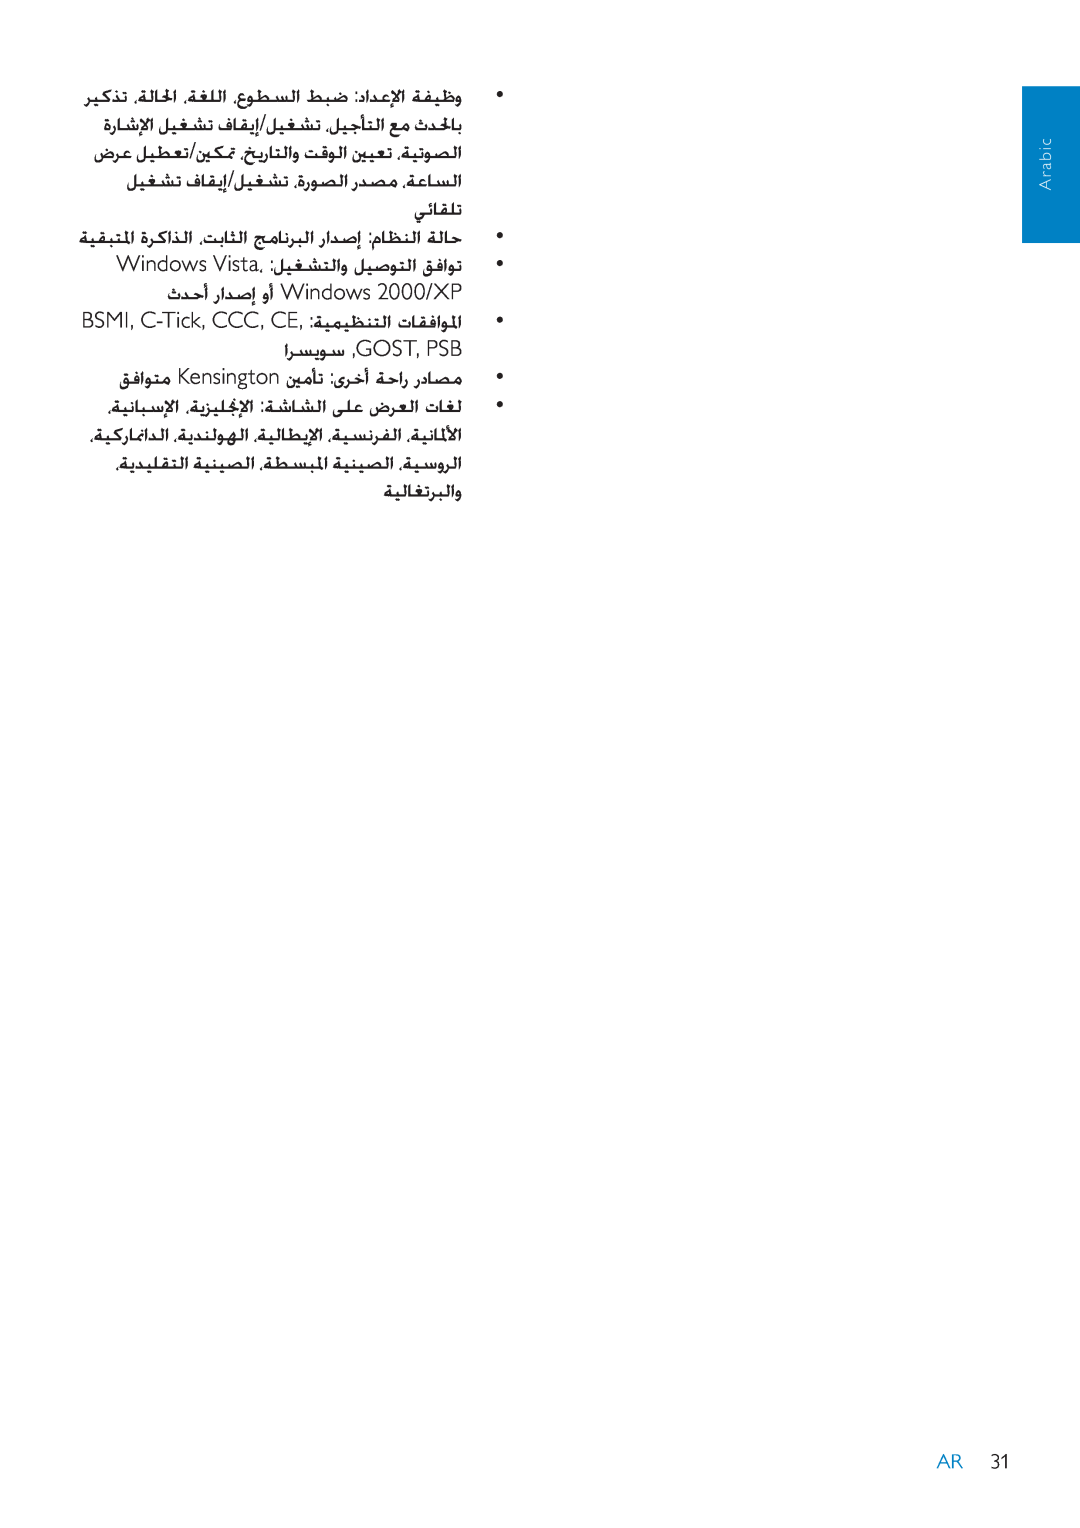 Philips SPF2007 manual ǘźȚǞƄž Kensingtonƞžƺů ȷǍųȖǀŲȚȤȤȢƾƫž, Windows VistaȆ ǚƸưƪƄŽȚȶǚƸǧǞƄŽȚǘźȚǞů, Arabic 